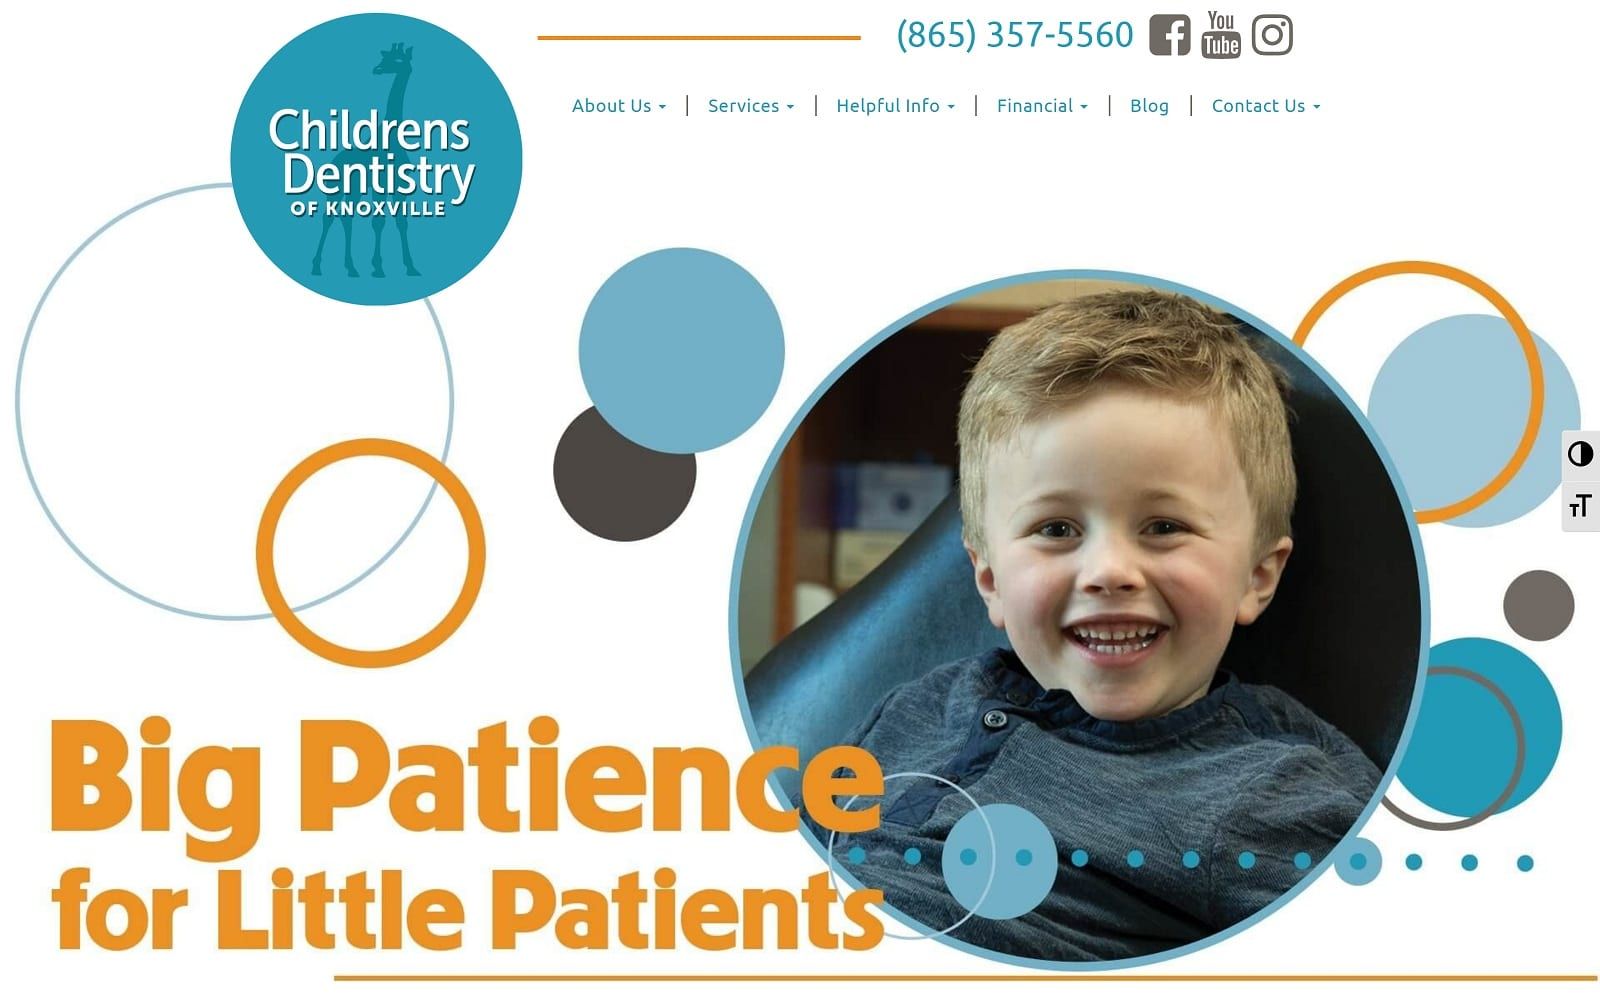 The Screenshot of Children's Dentistry of Knoxville childrensdentistryofknoxville.com Dr. Darryl Phillips Website